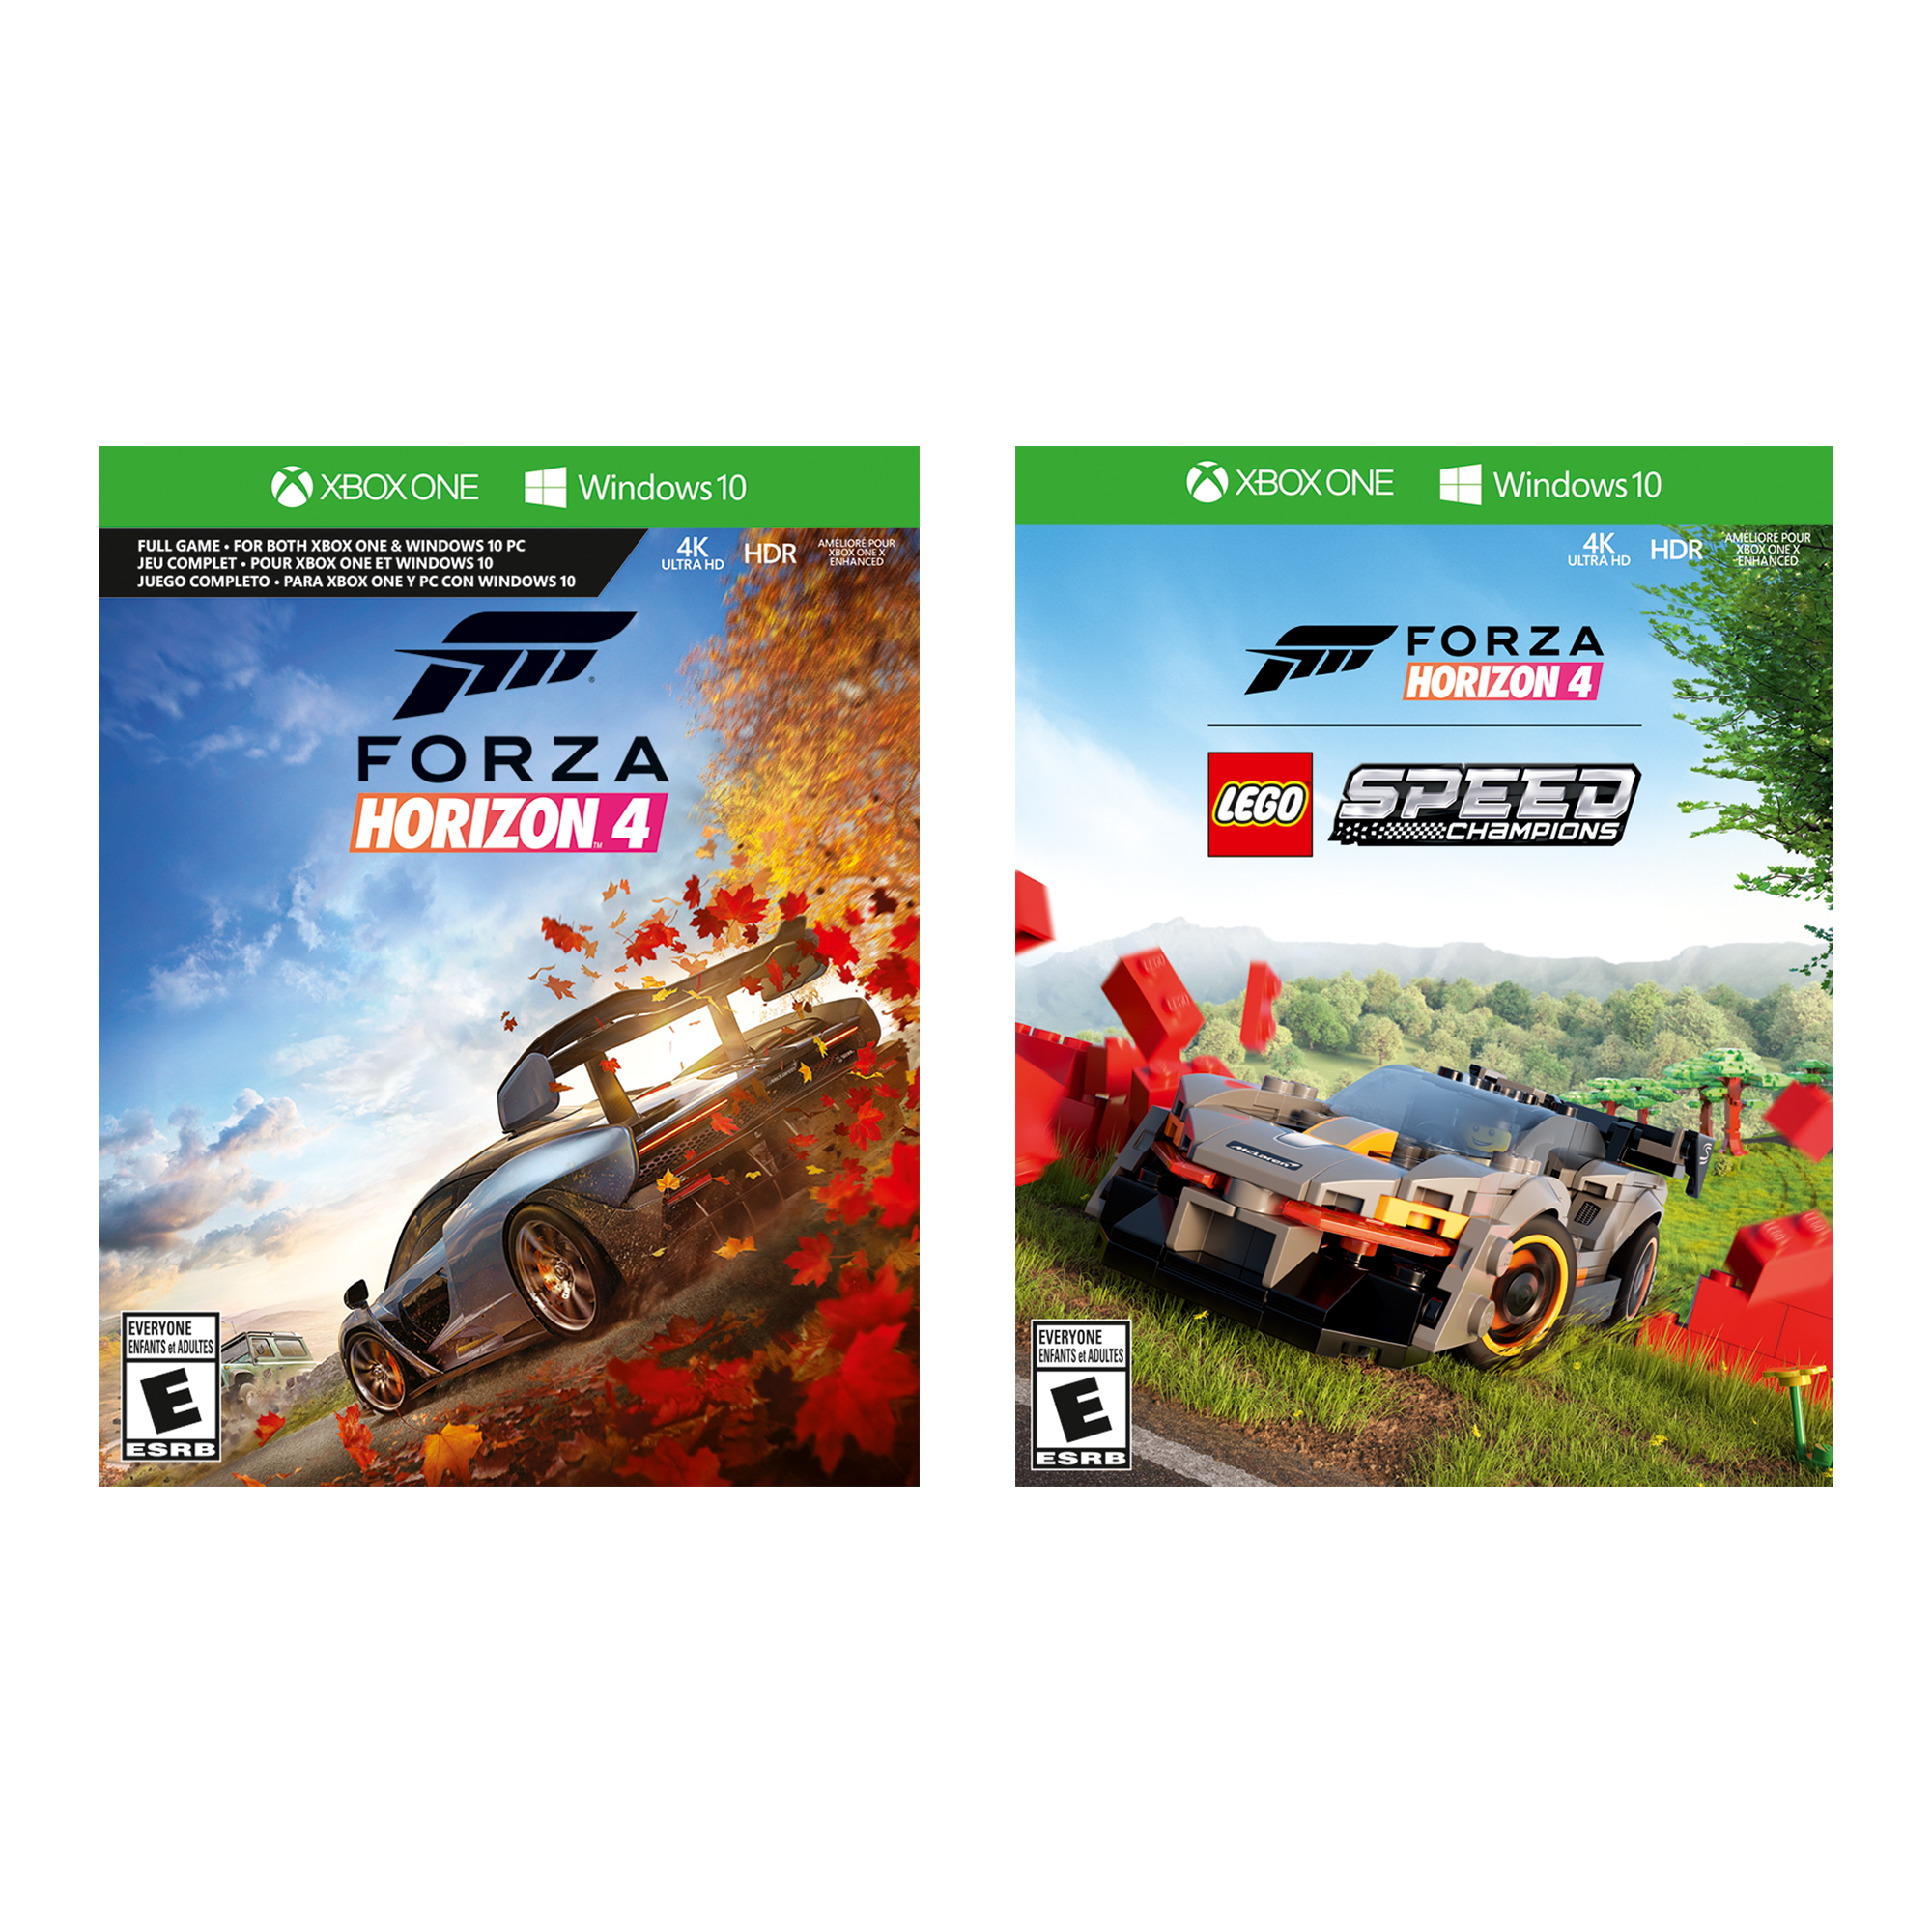 Microsoft 234-01121 Xbox One S 1TB Forza Horizon 4 LEGO Speed Champions Bundle, White - image 4 of 19